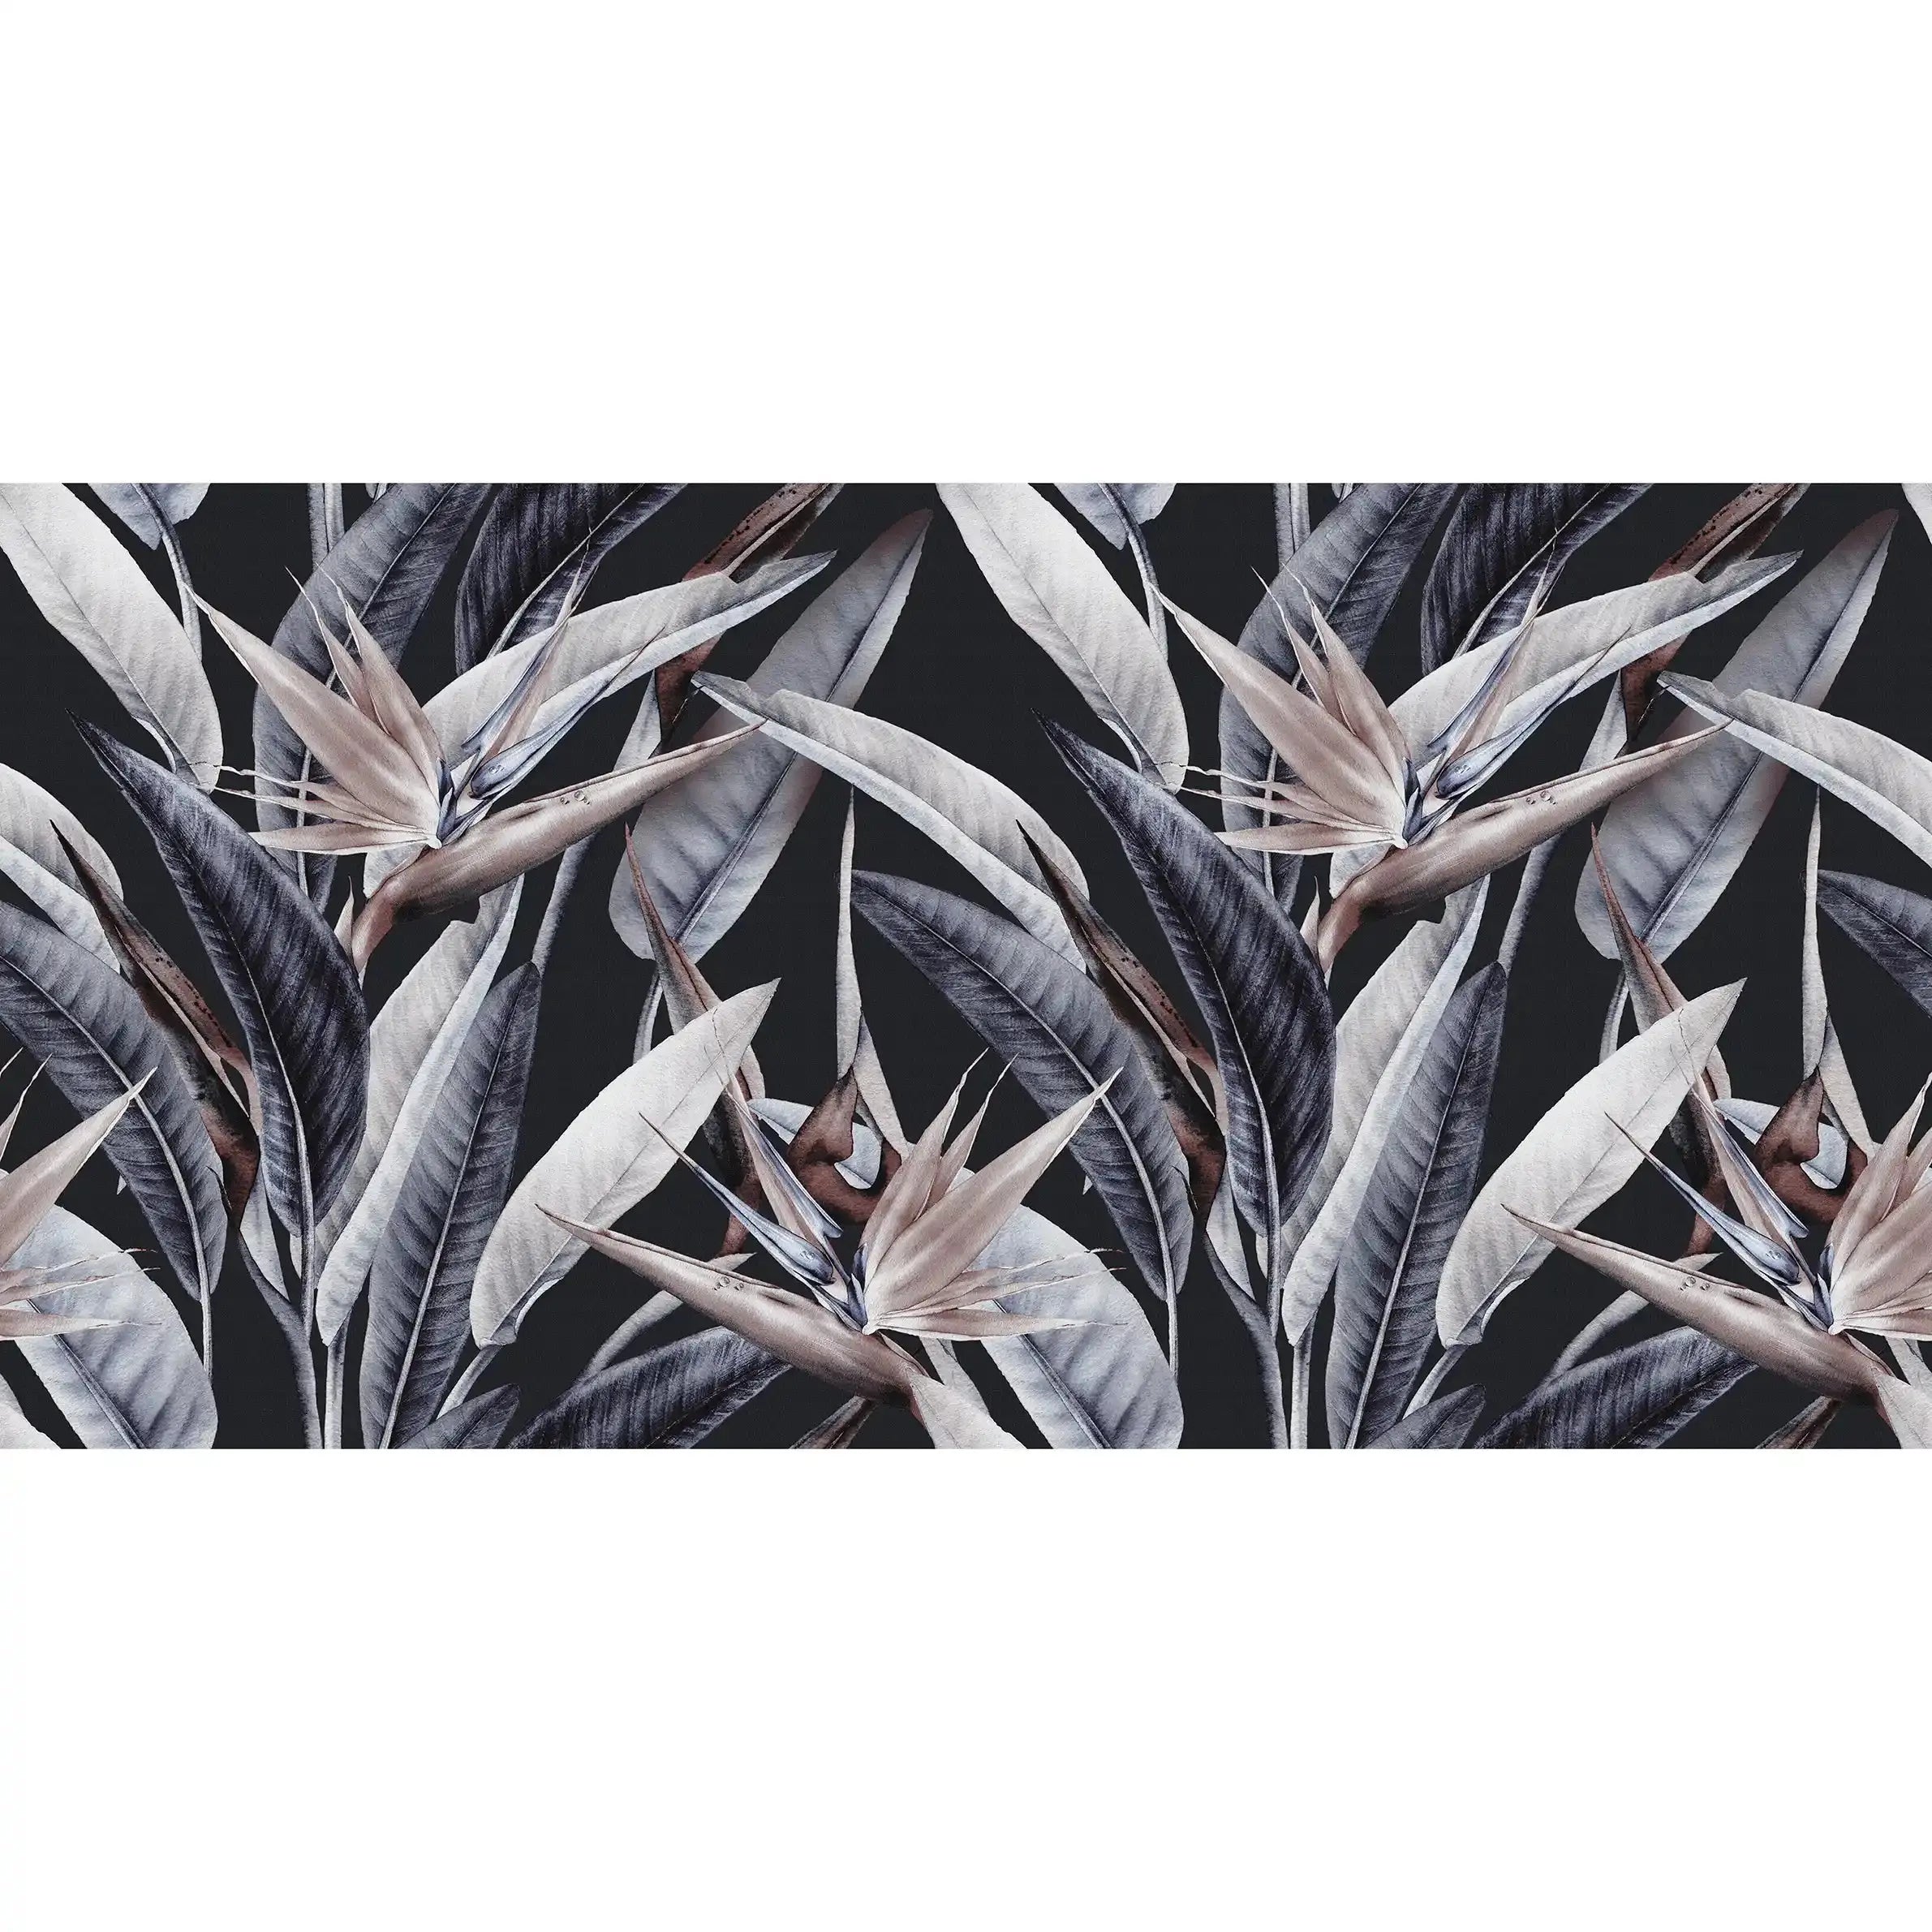 3039-F / Tropical Bird of Paradise Peel and Stick Wallpaper – Vibrant Botanical Design Wall Decor - Artevella